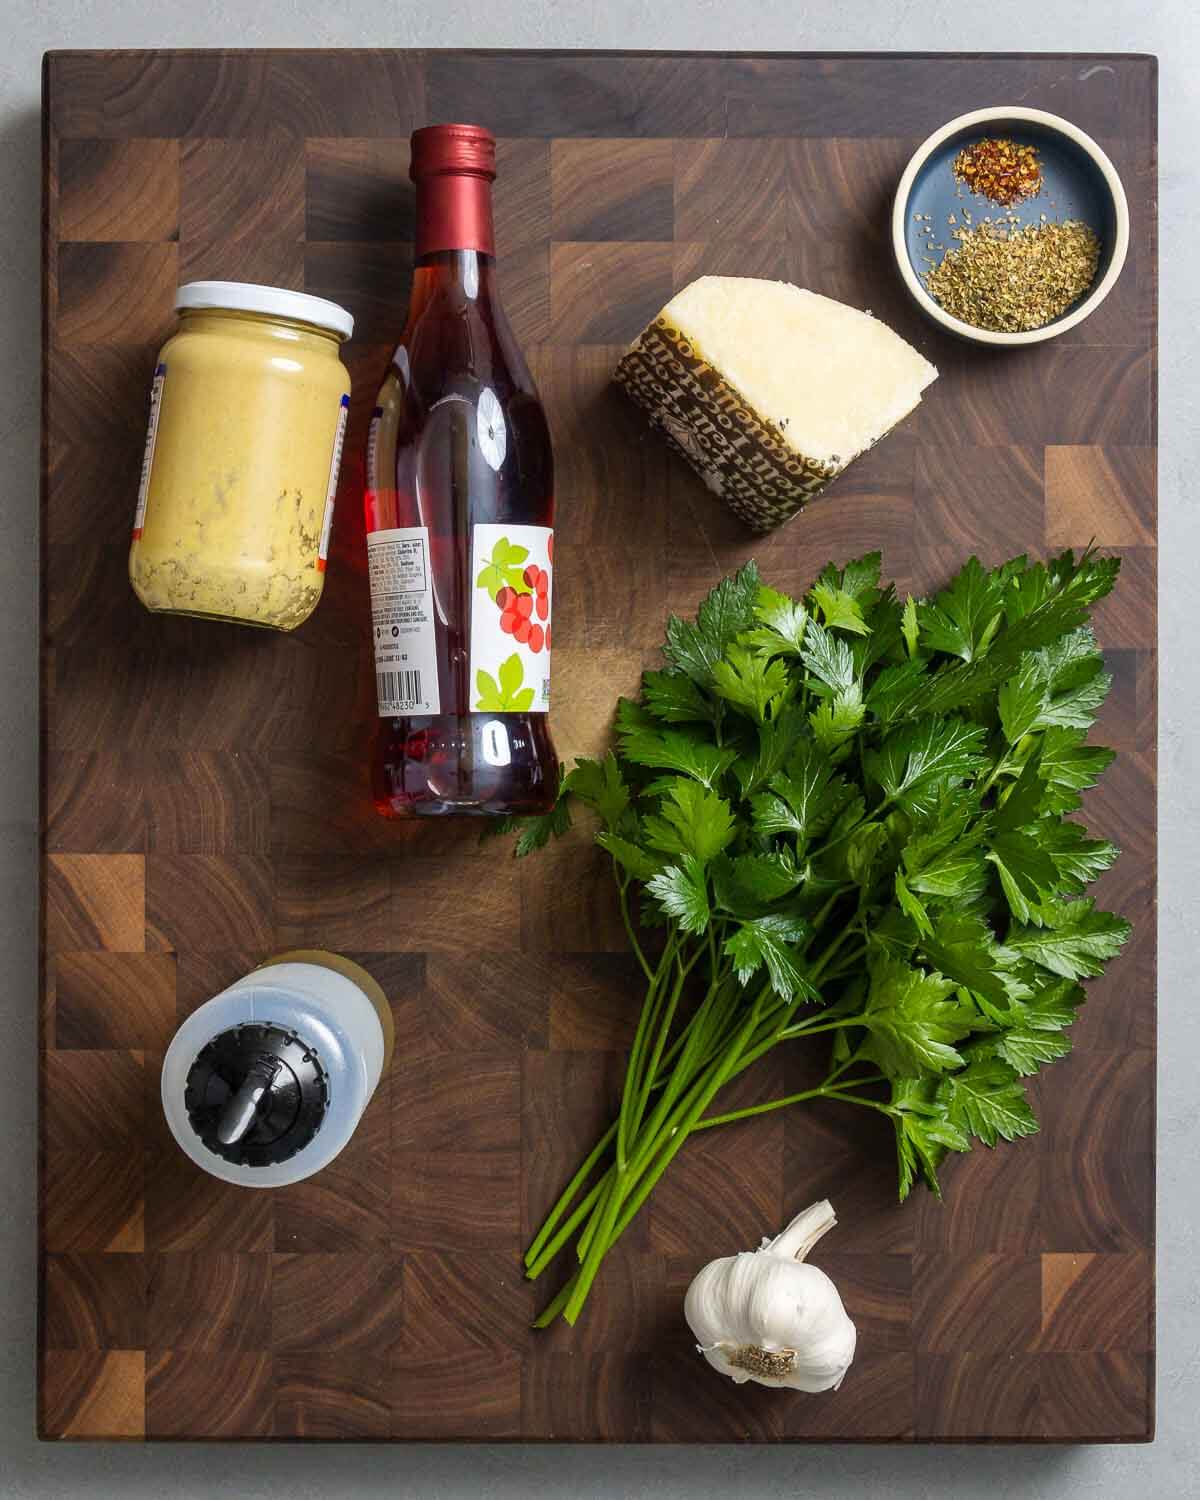 Ingredients shown: Dijon mustard, red wine vinegar, Pecorino, oregano, hot red pepper flakes, extra virgin olive oil, parsley, and garlic.